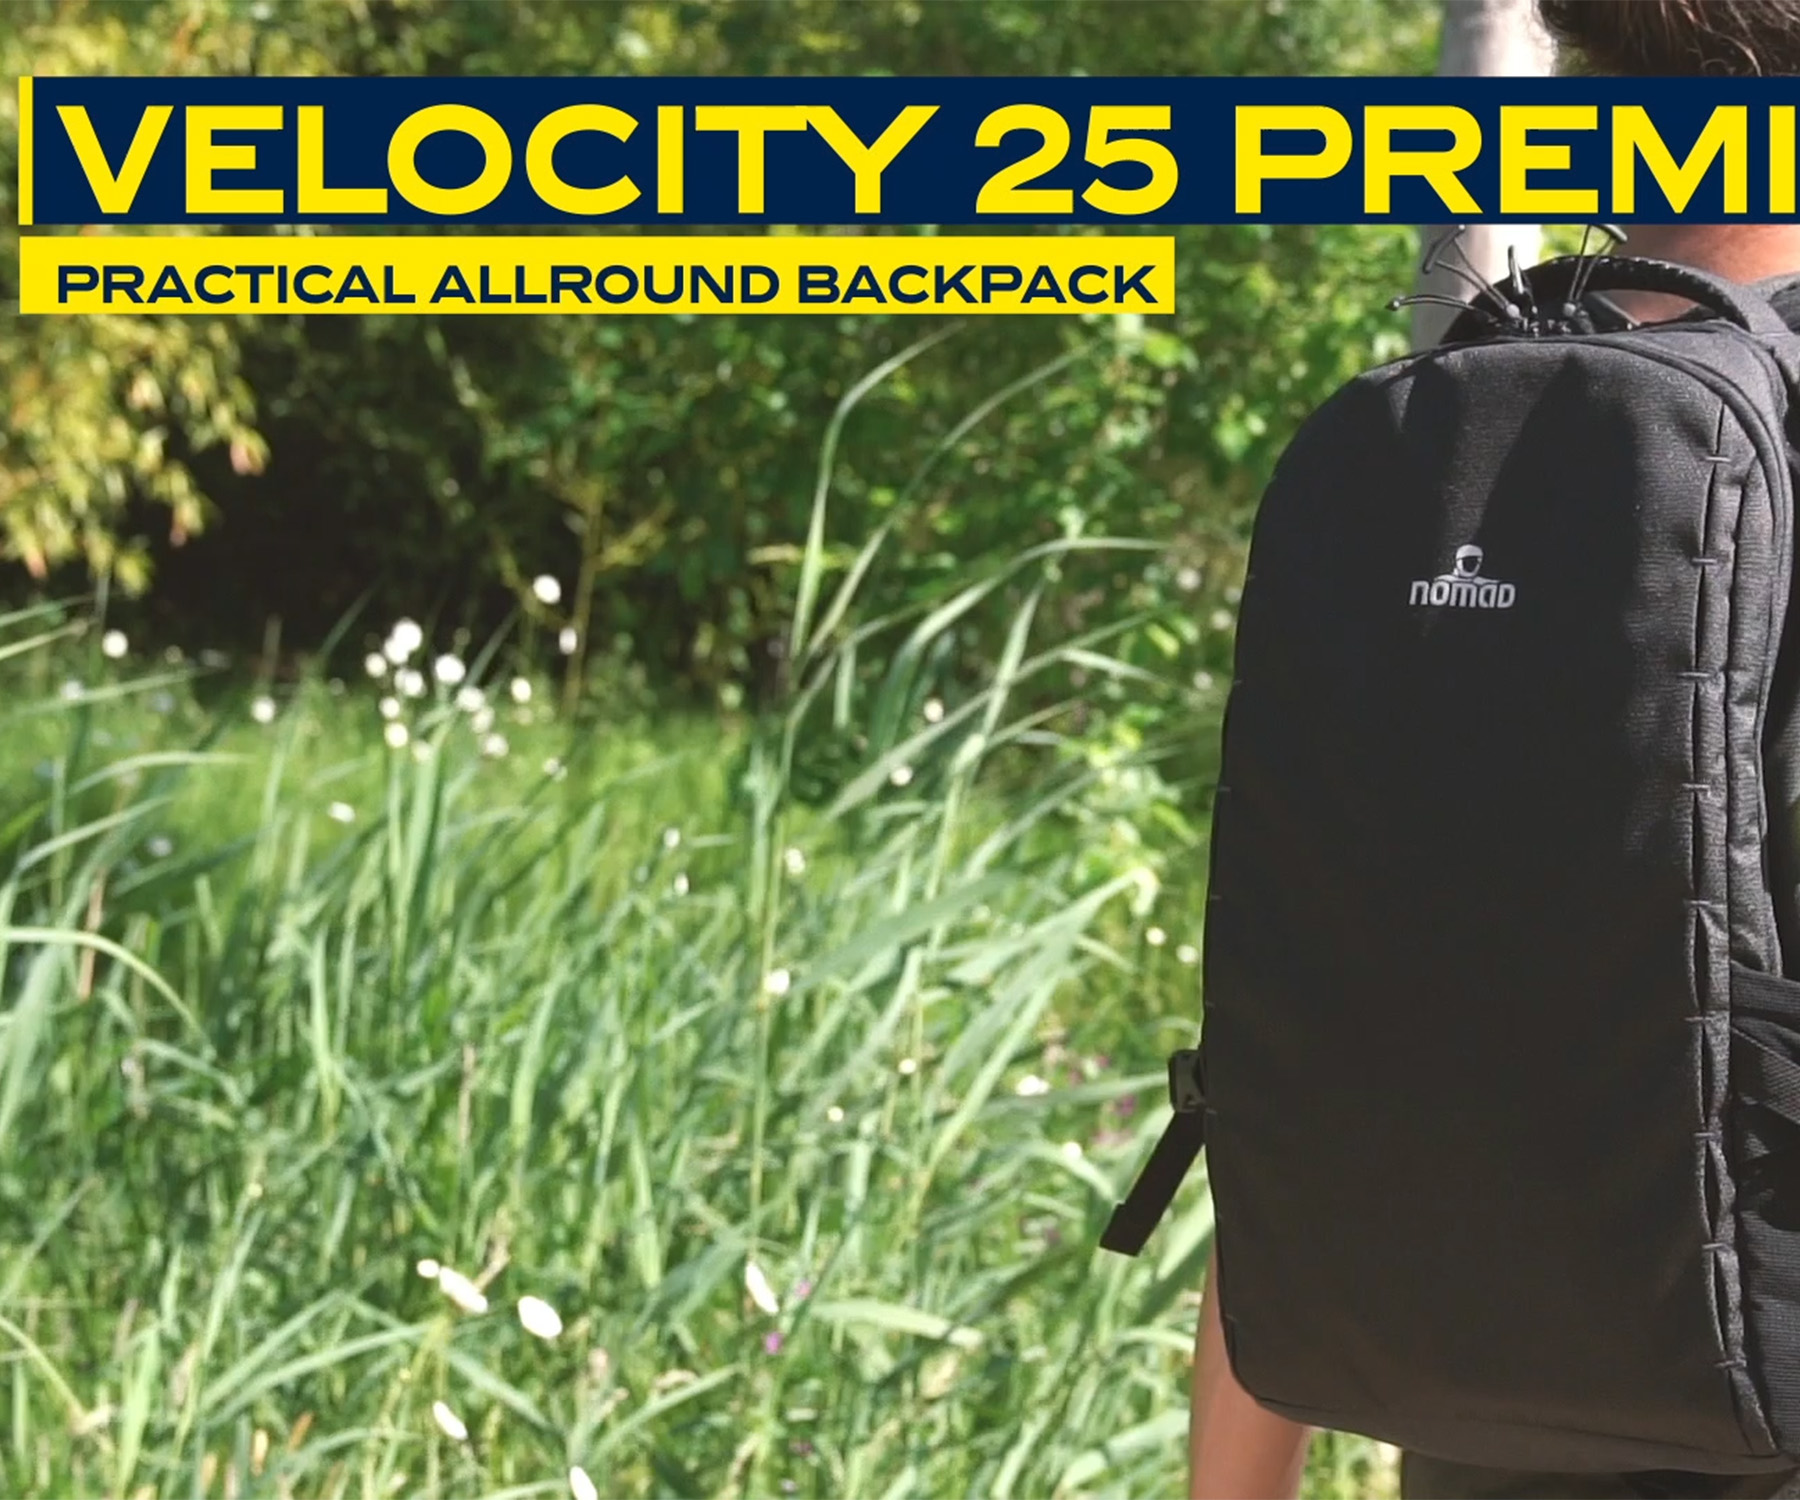 Velocity 25 Premium